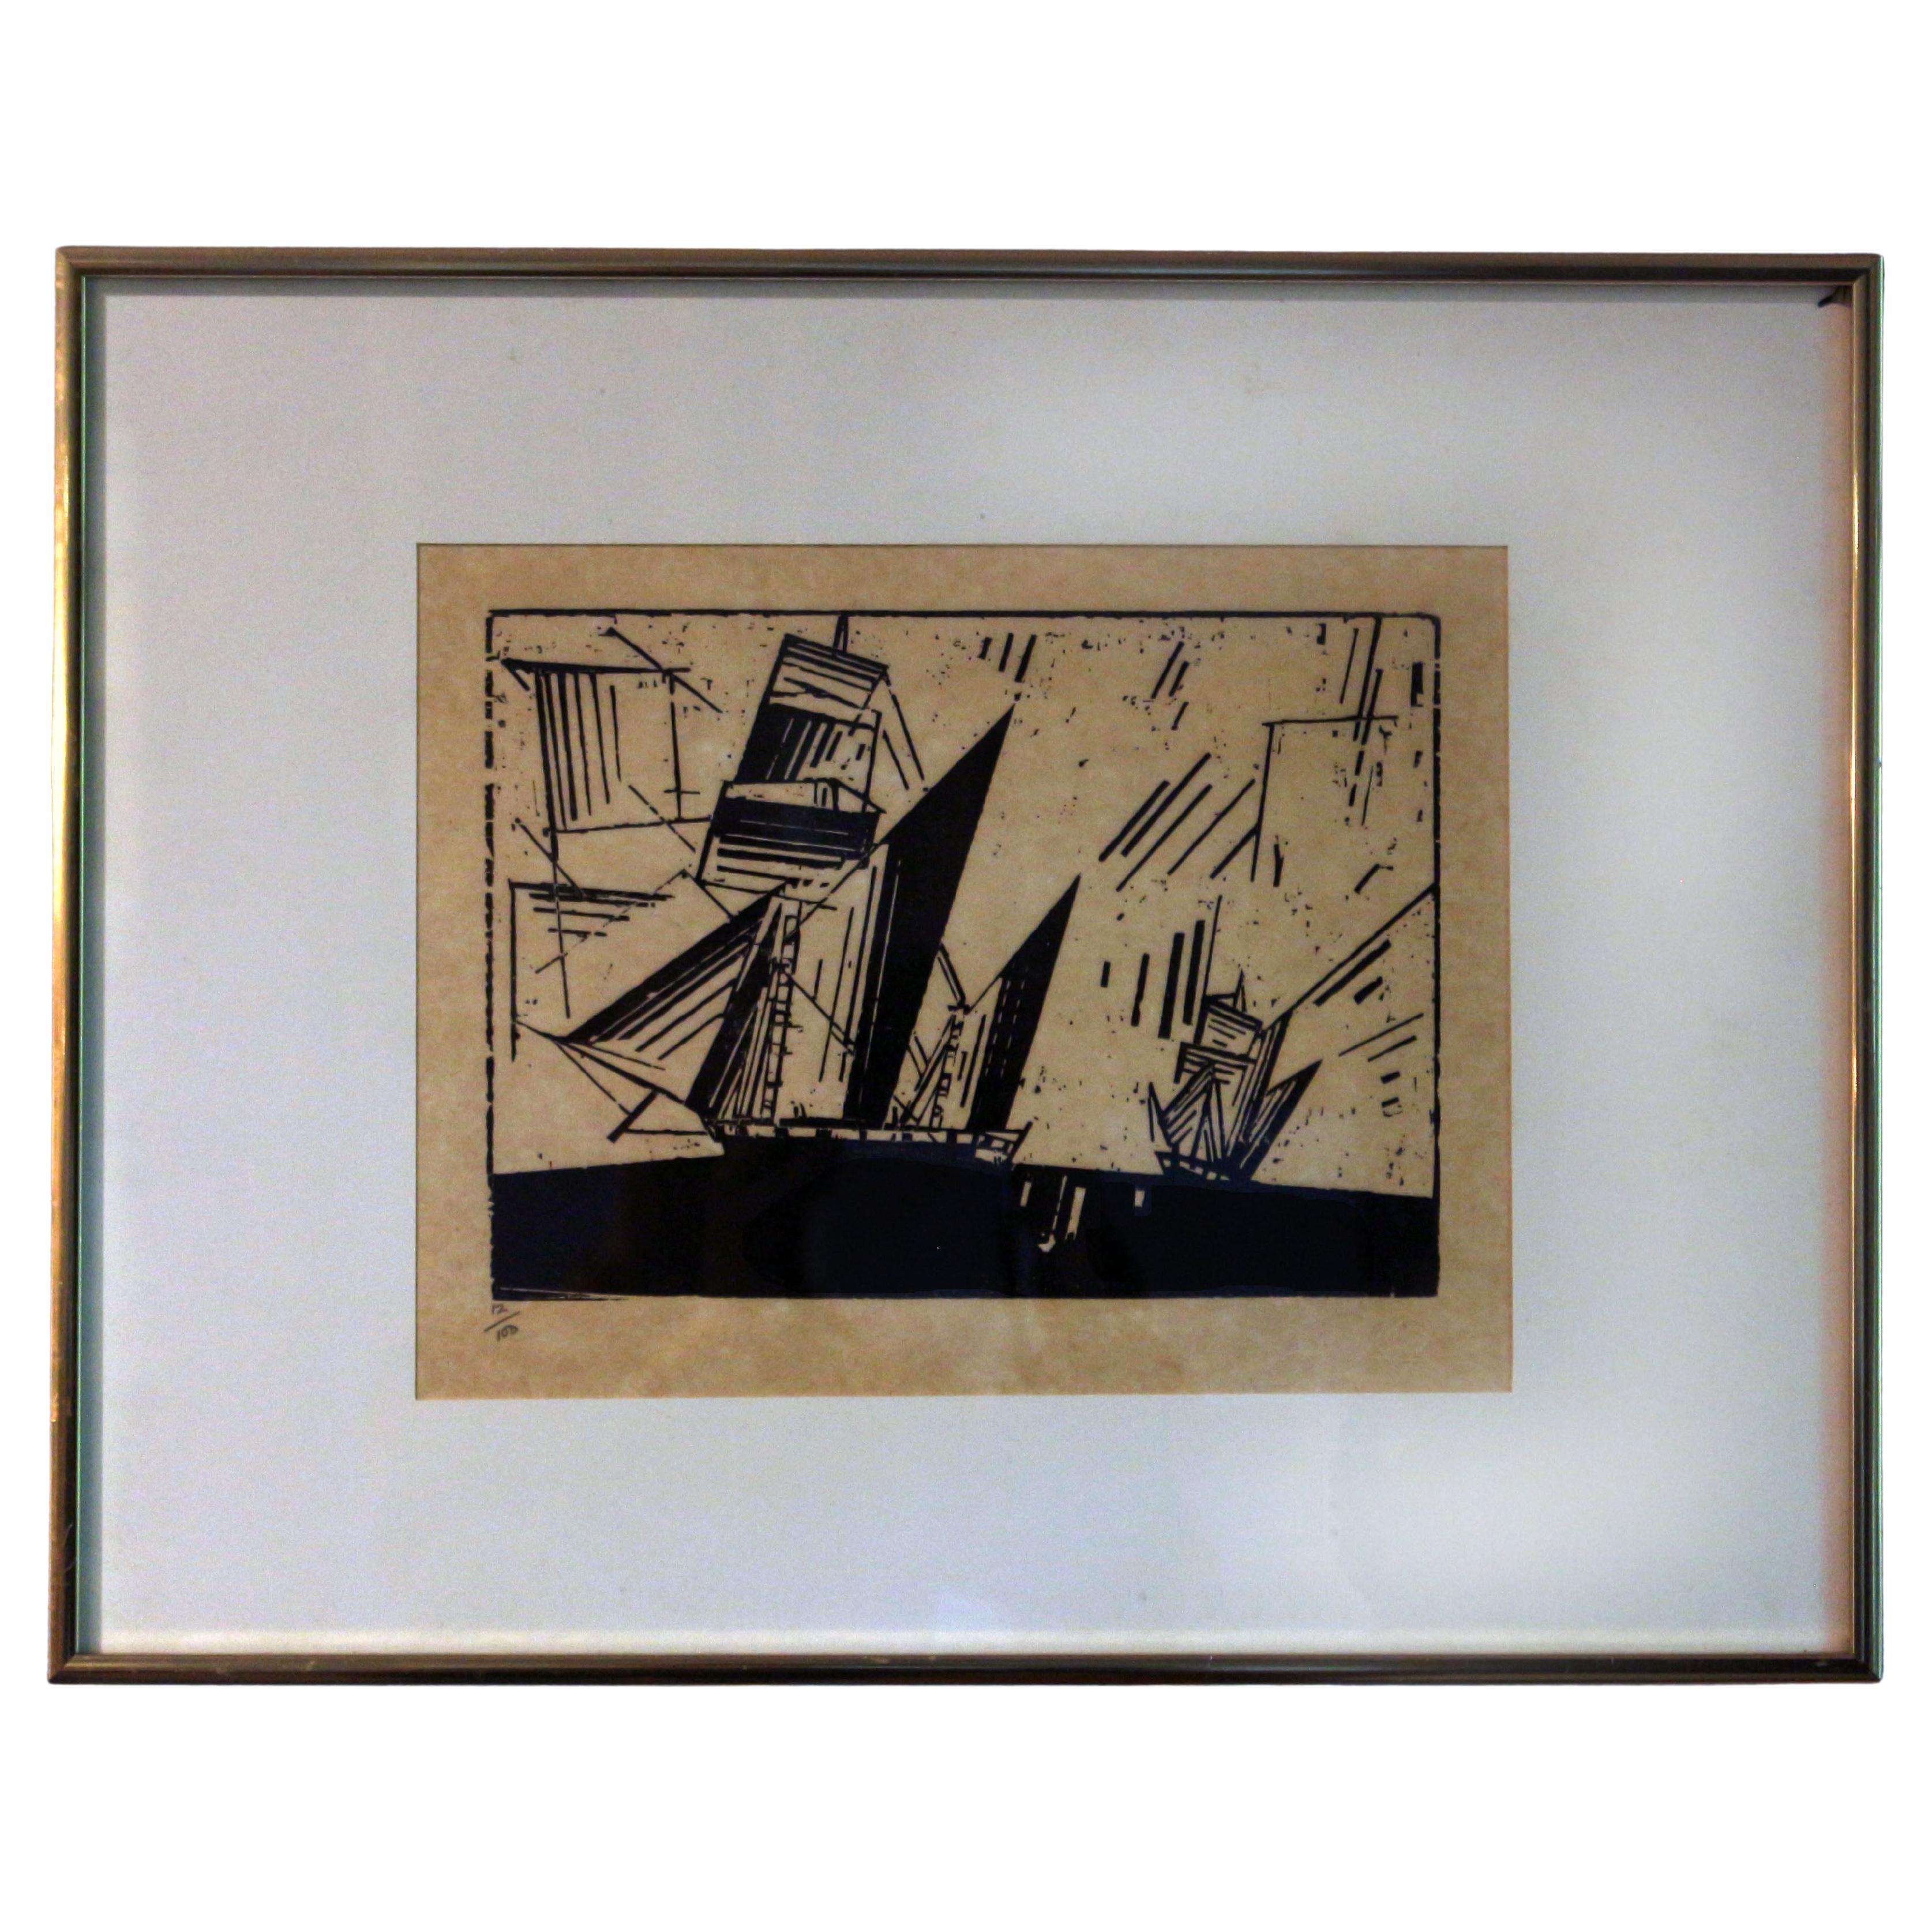 1964 Holzschnitt-Druck „Topsail Ketches“ von Lyonel Feininger